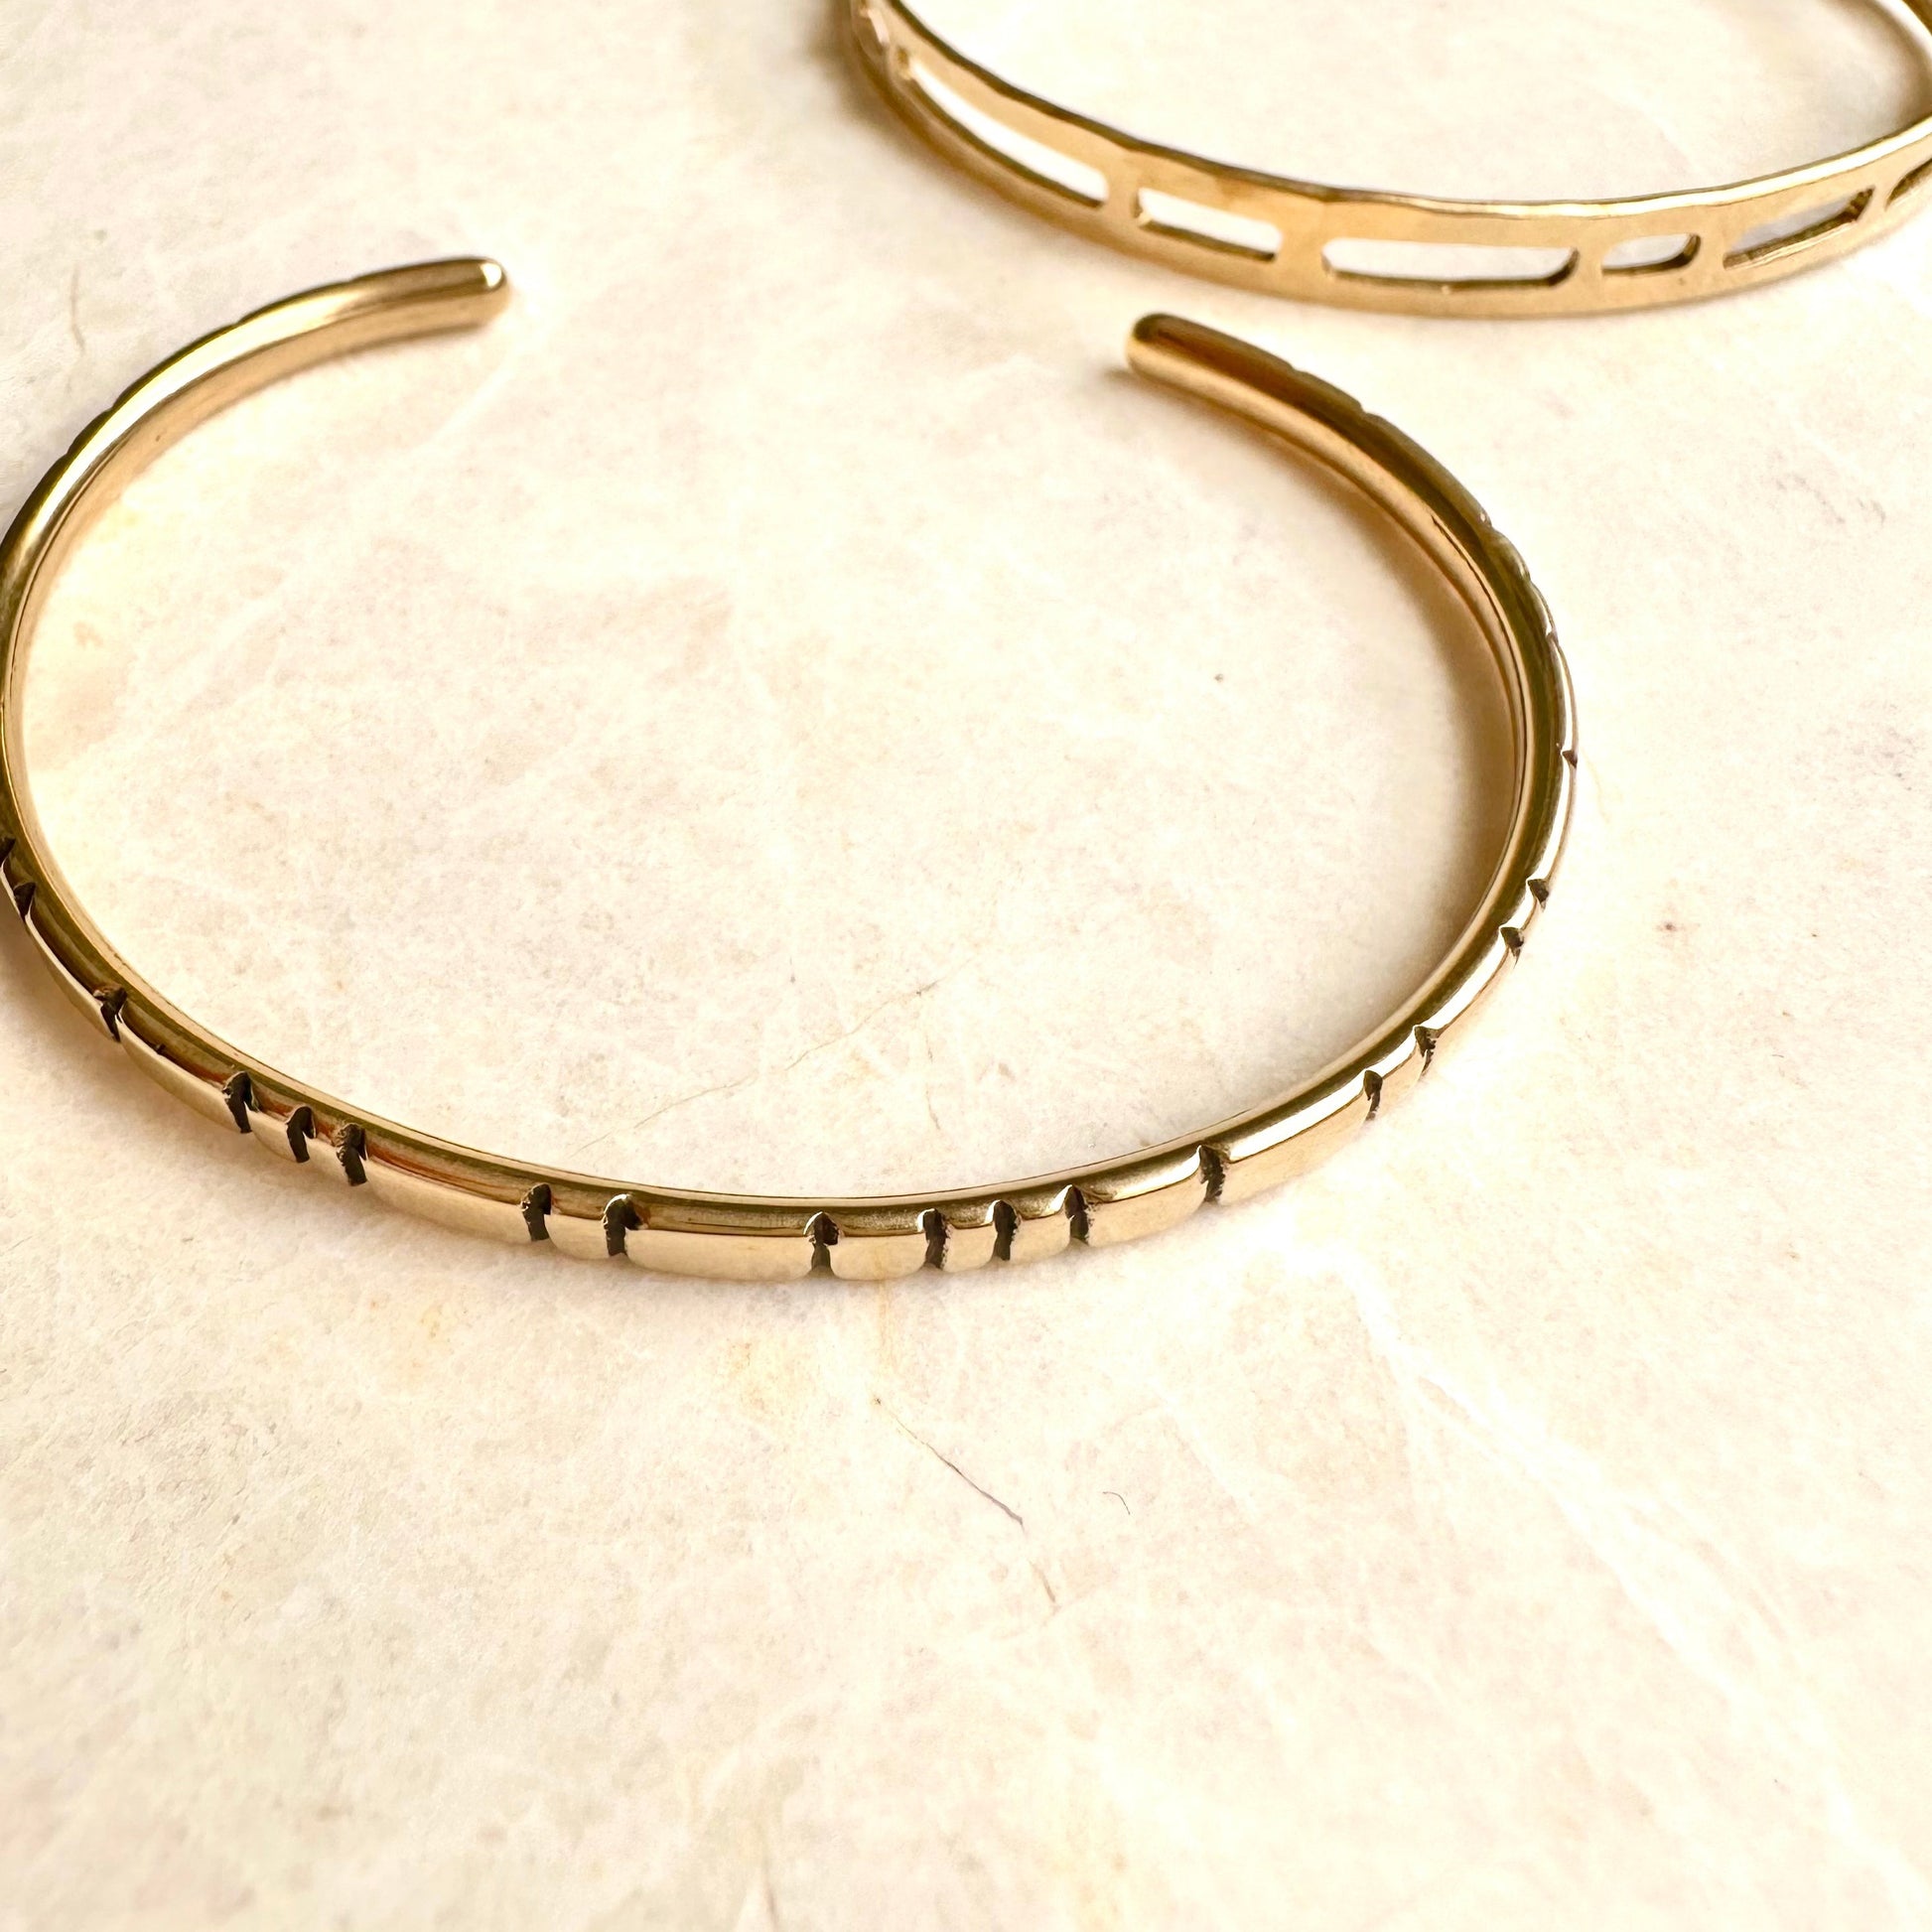 Handmade brass cuff bracelet with linear details.